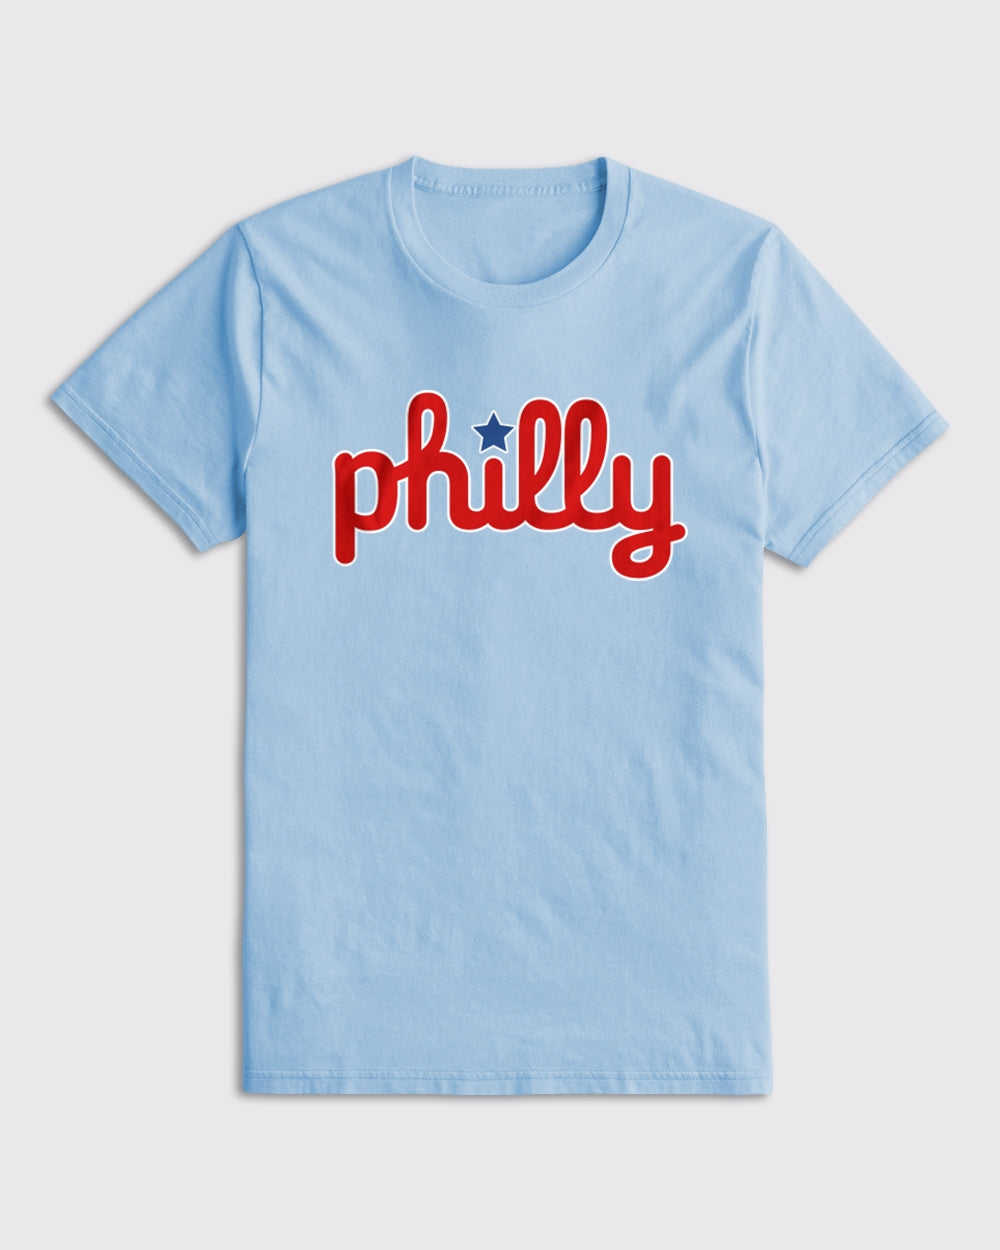 Philadelphia 76ers Baby Apparel, Baby 76ers Clothing, Merchandise